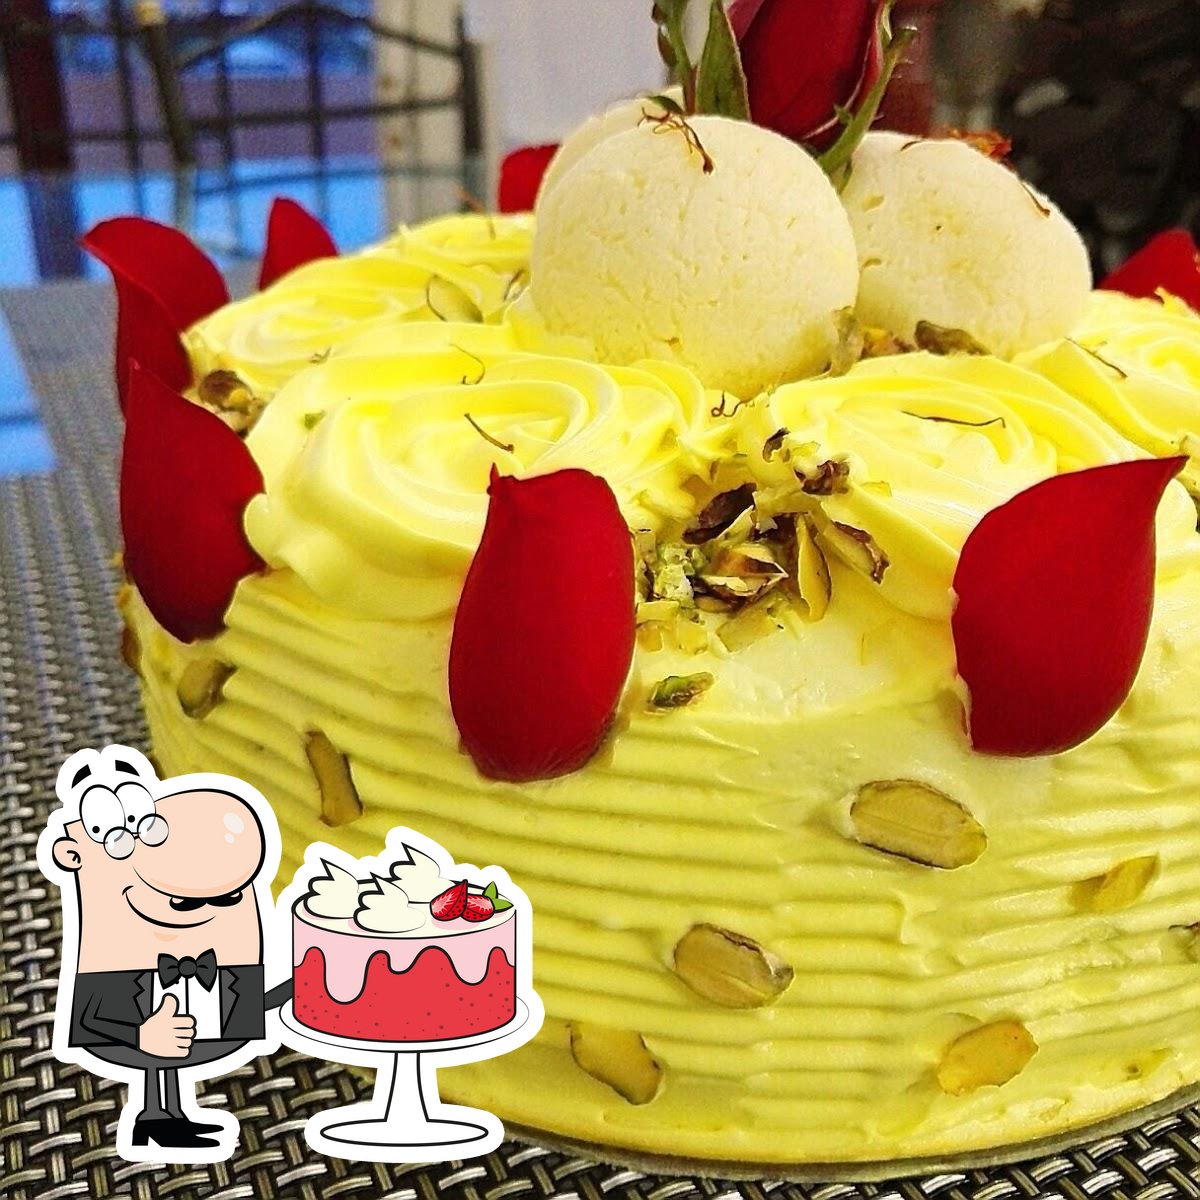 Accio the best birthday cake... - RJ's Cakes and Flowers | Facebook